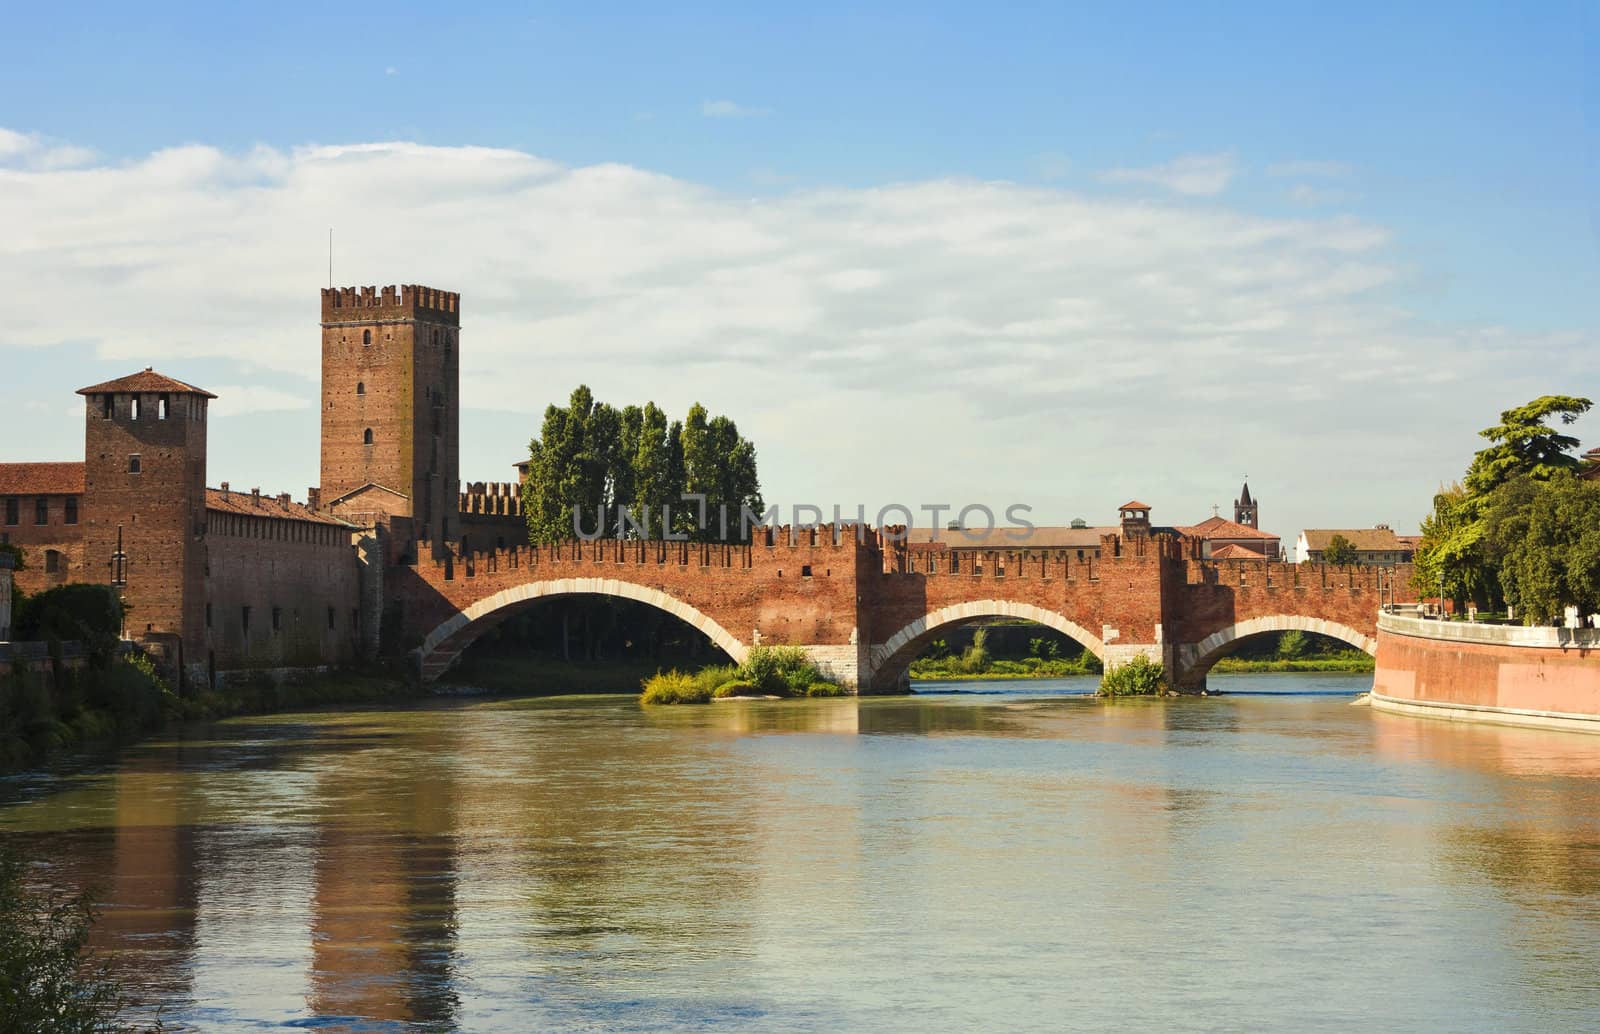 The Castelvecchio Bridge in Verona by kirilart